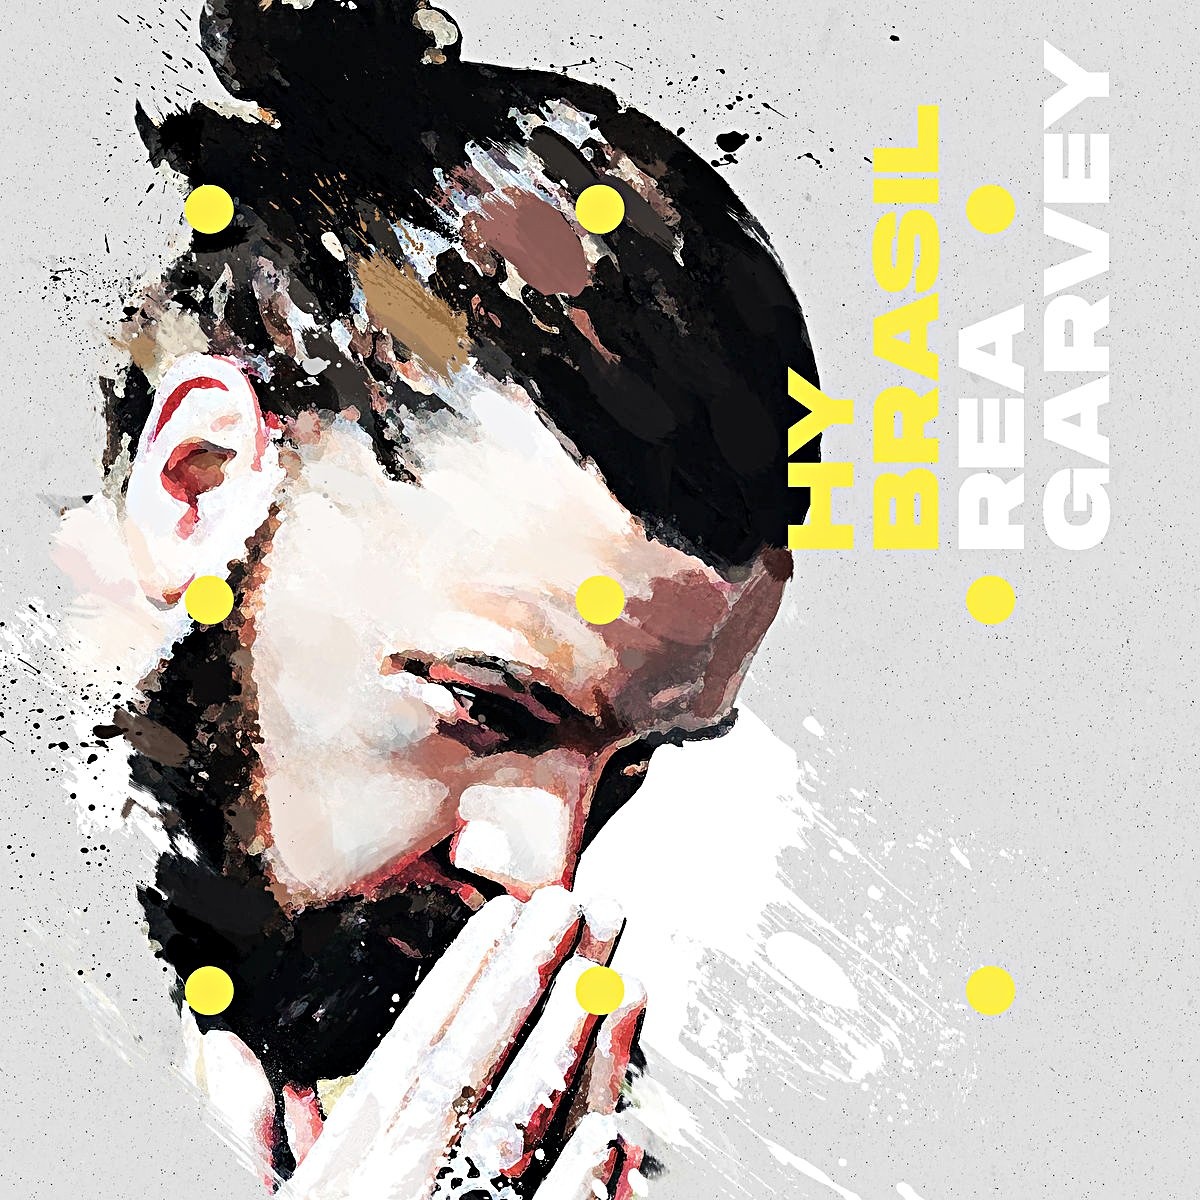 Hy Brasil - Rea Garvey. (CD)